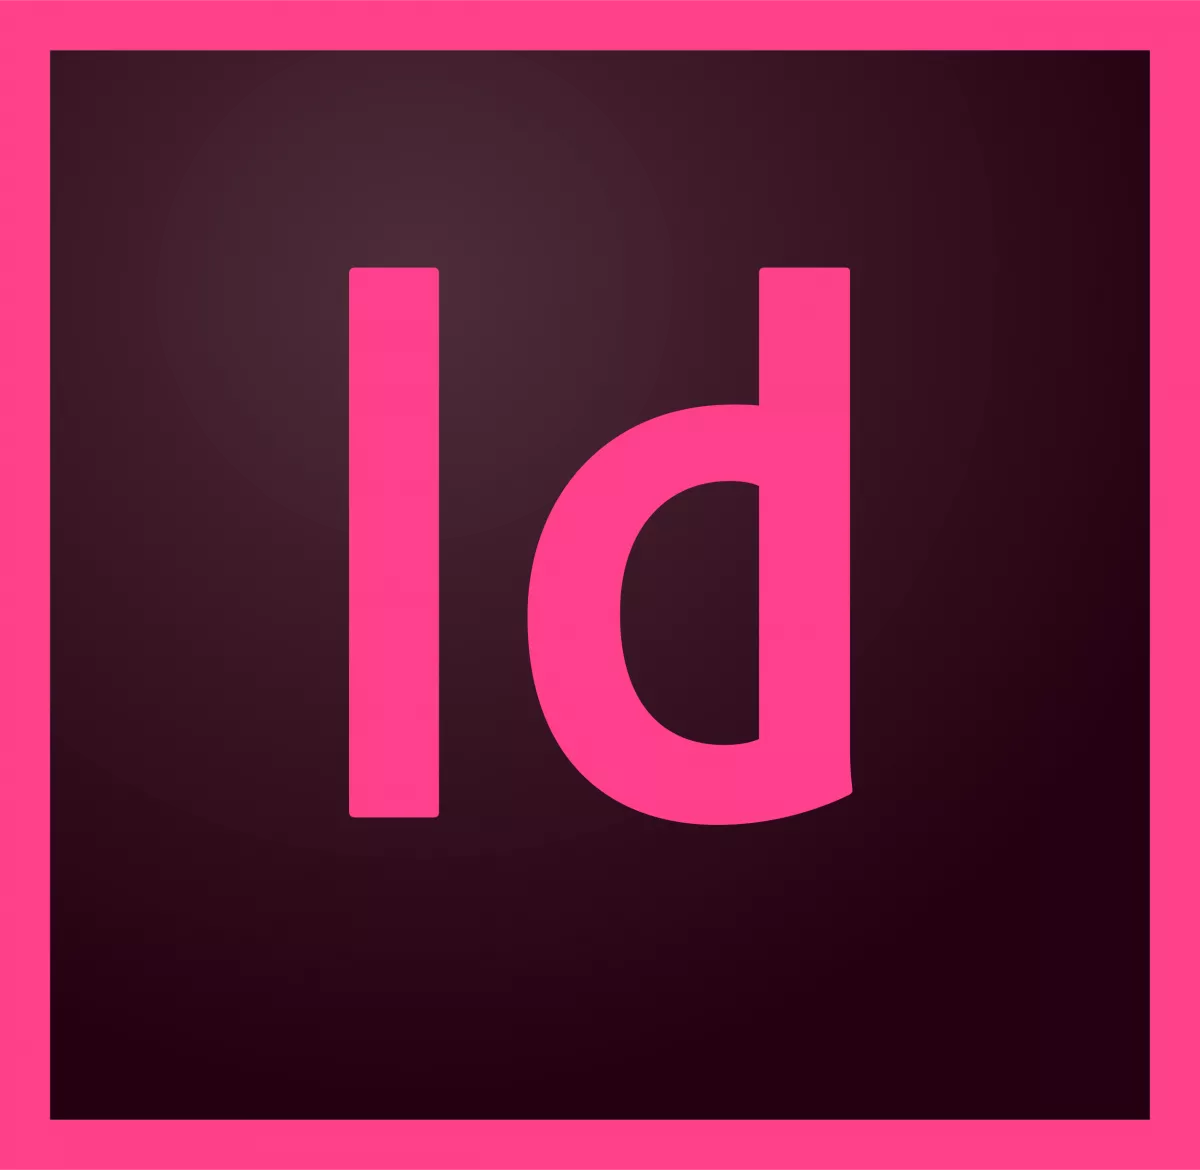 Licențe software - Adobe InDesign for teams, Licență nouă, L 1 1 - 9, Multi-European Languages, transilvae.ro